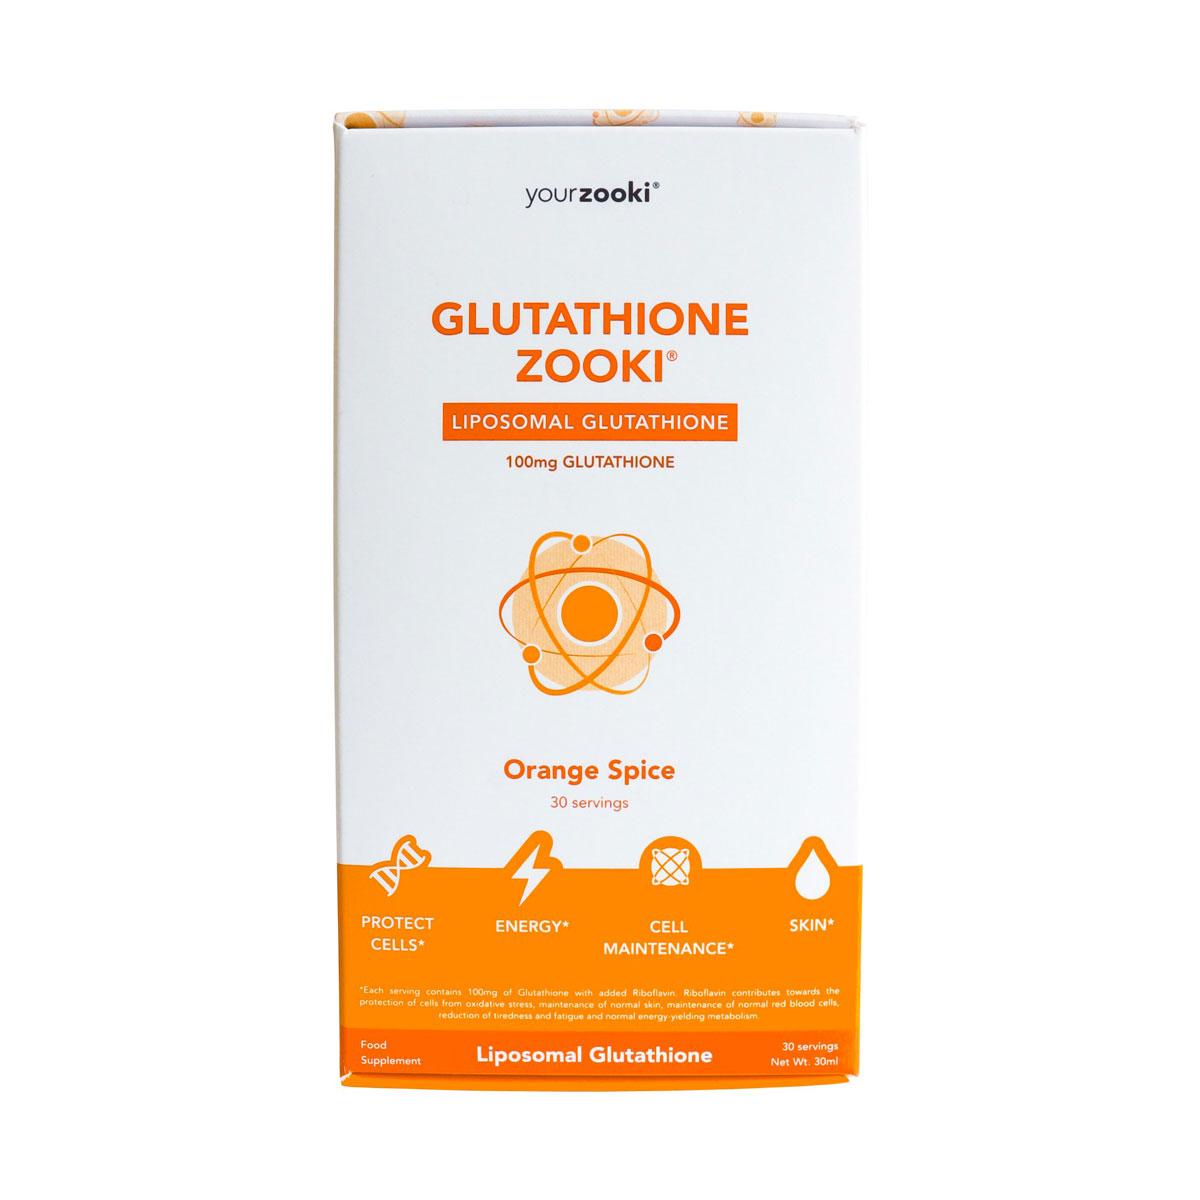 Glutathione zooki liposomal